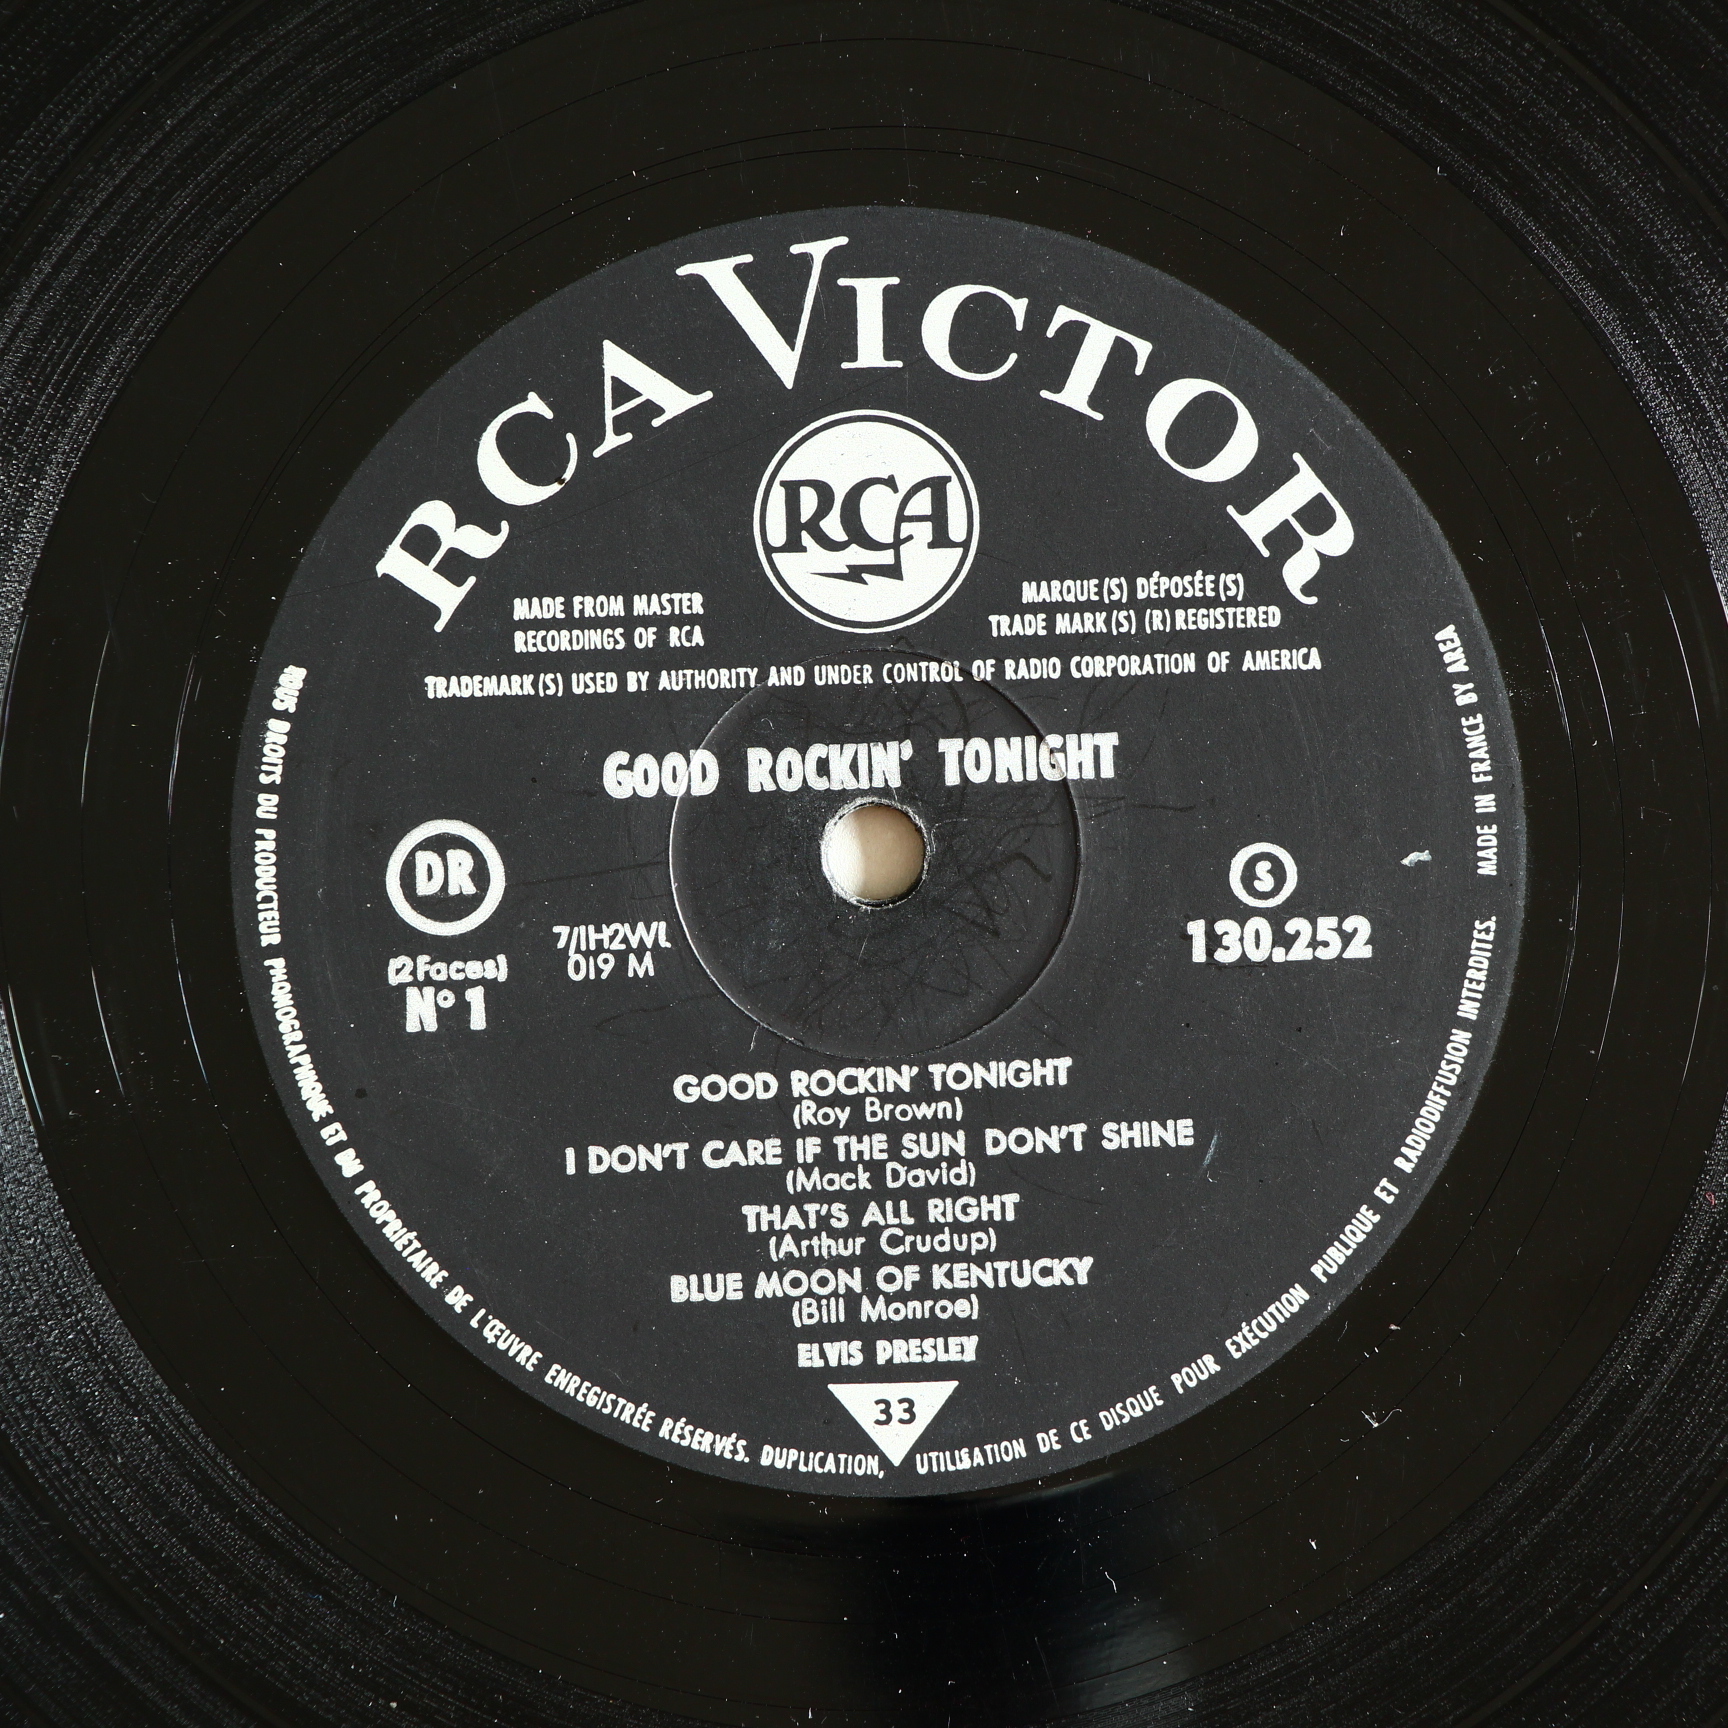 Elvis Presley Rare French 10 inch vinyl record "Good Rockin Tonight" original pressing 130.252. - Image 4 of 6